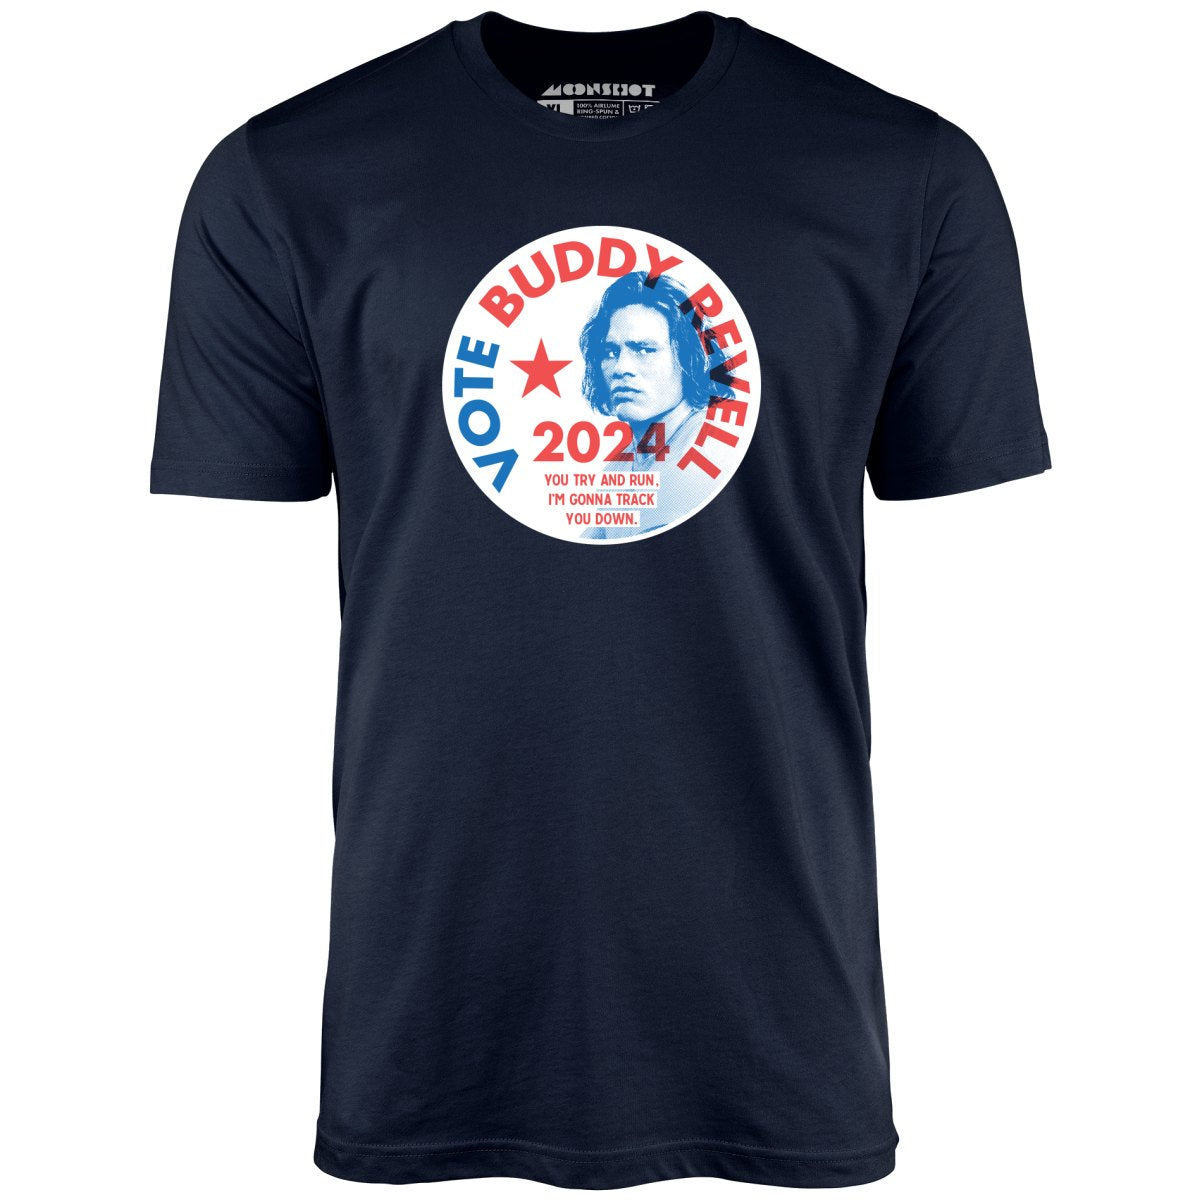 Buddy Revell 2024 - Unisex T-Shirt